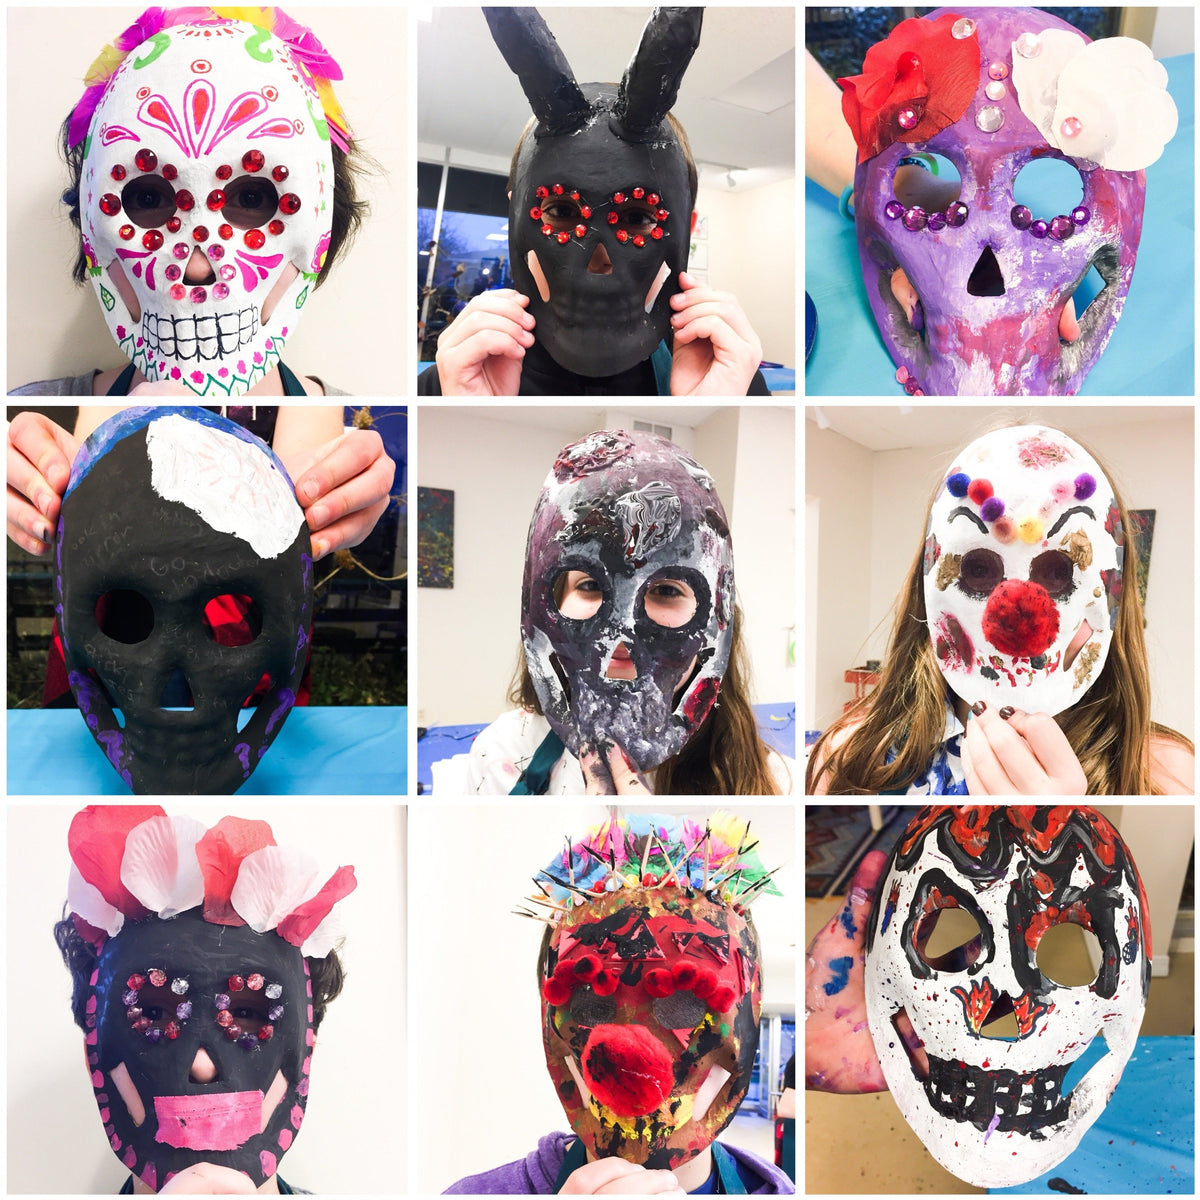 Teen Nights: Halloween Masks and Sugar Skulls (ages 11-16) 6:30-8:30pm (Oct. 20)